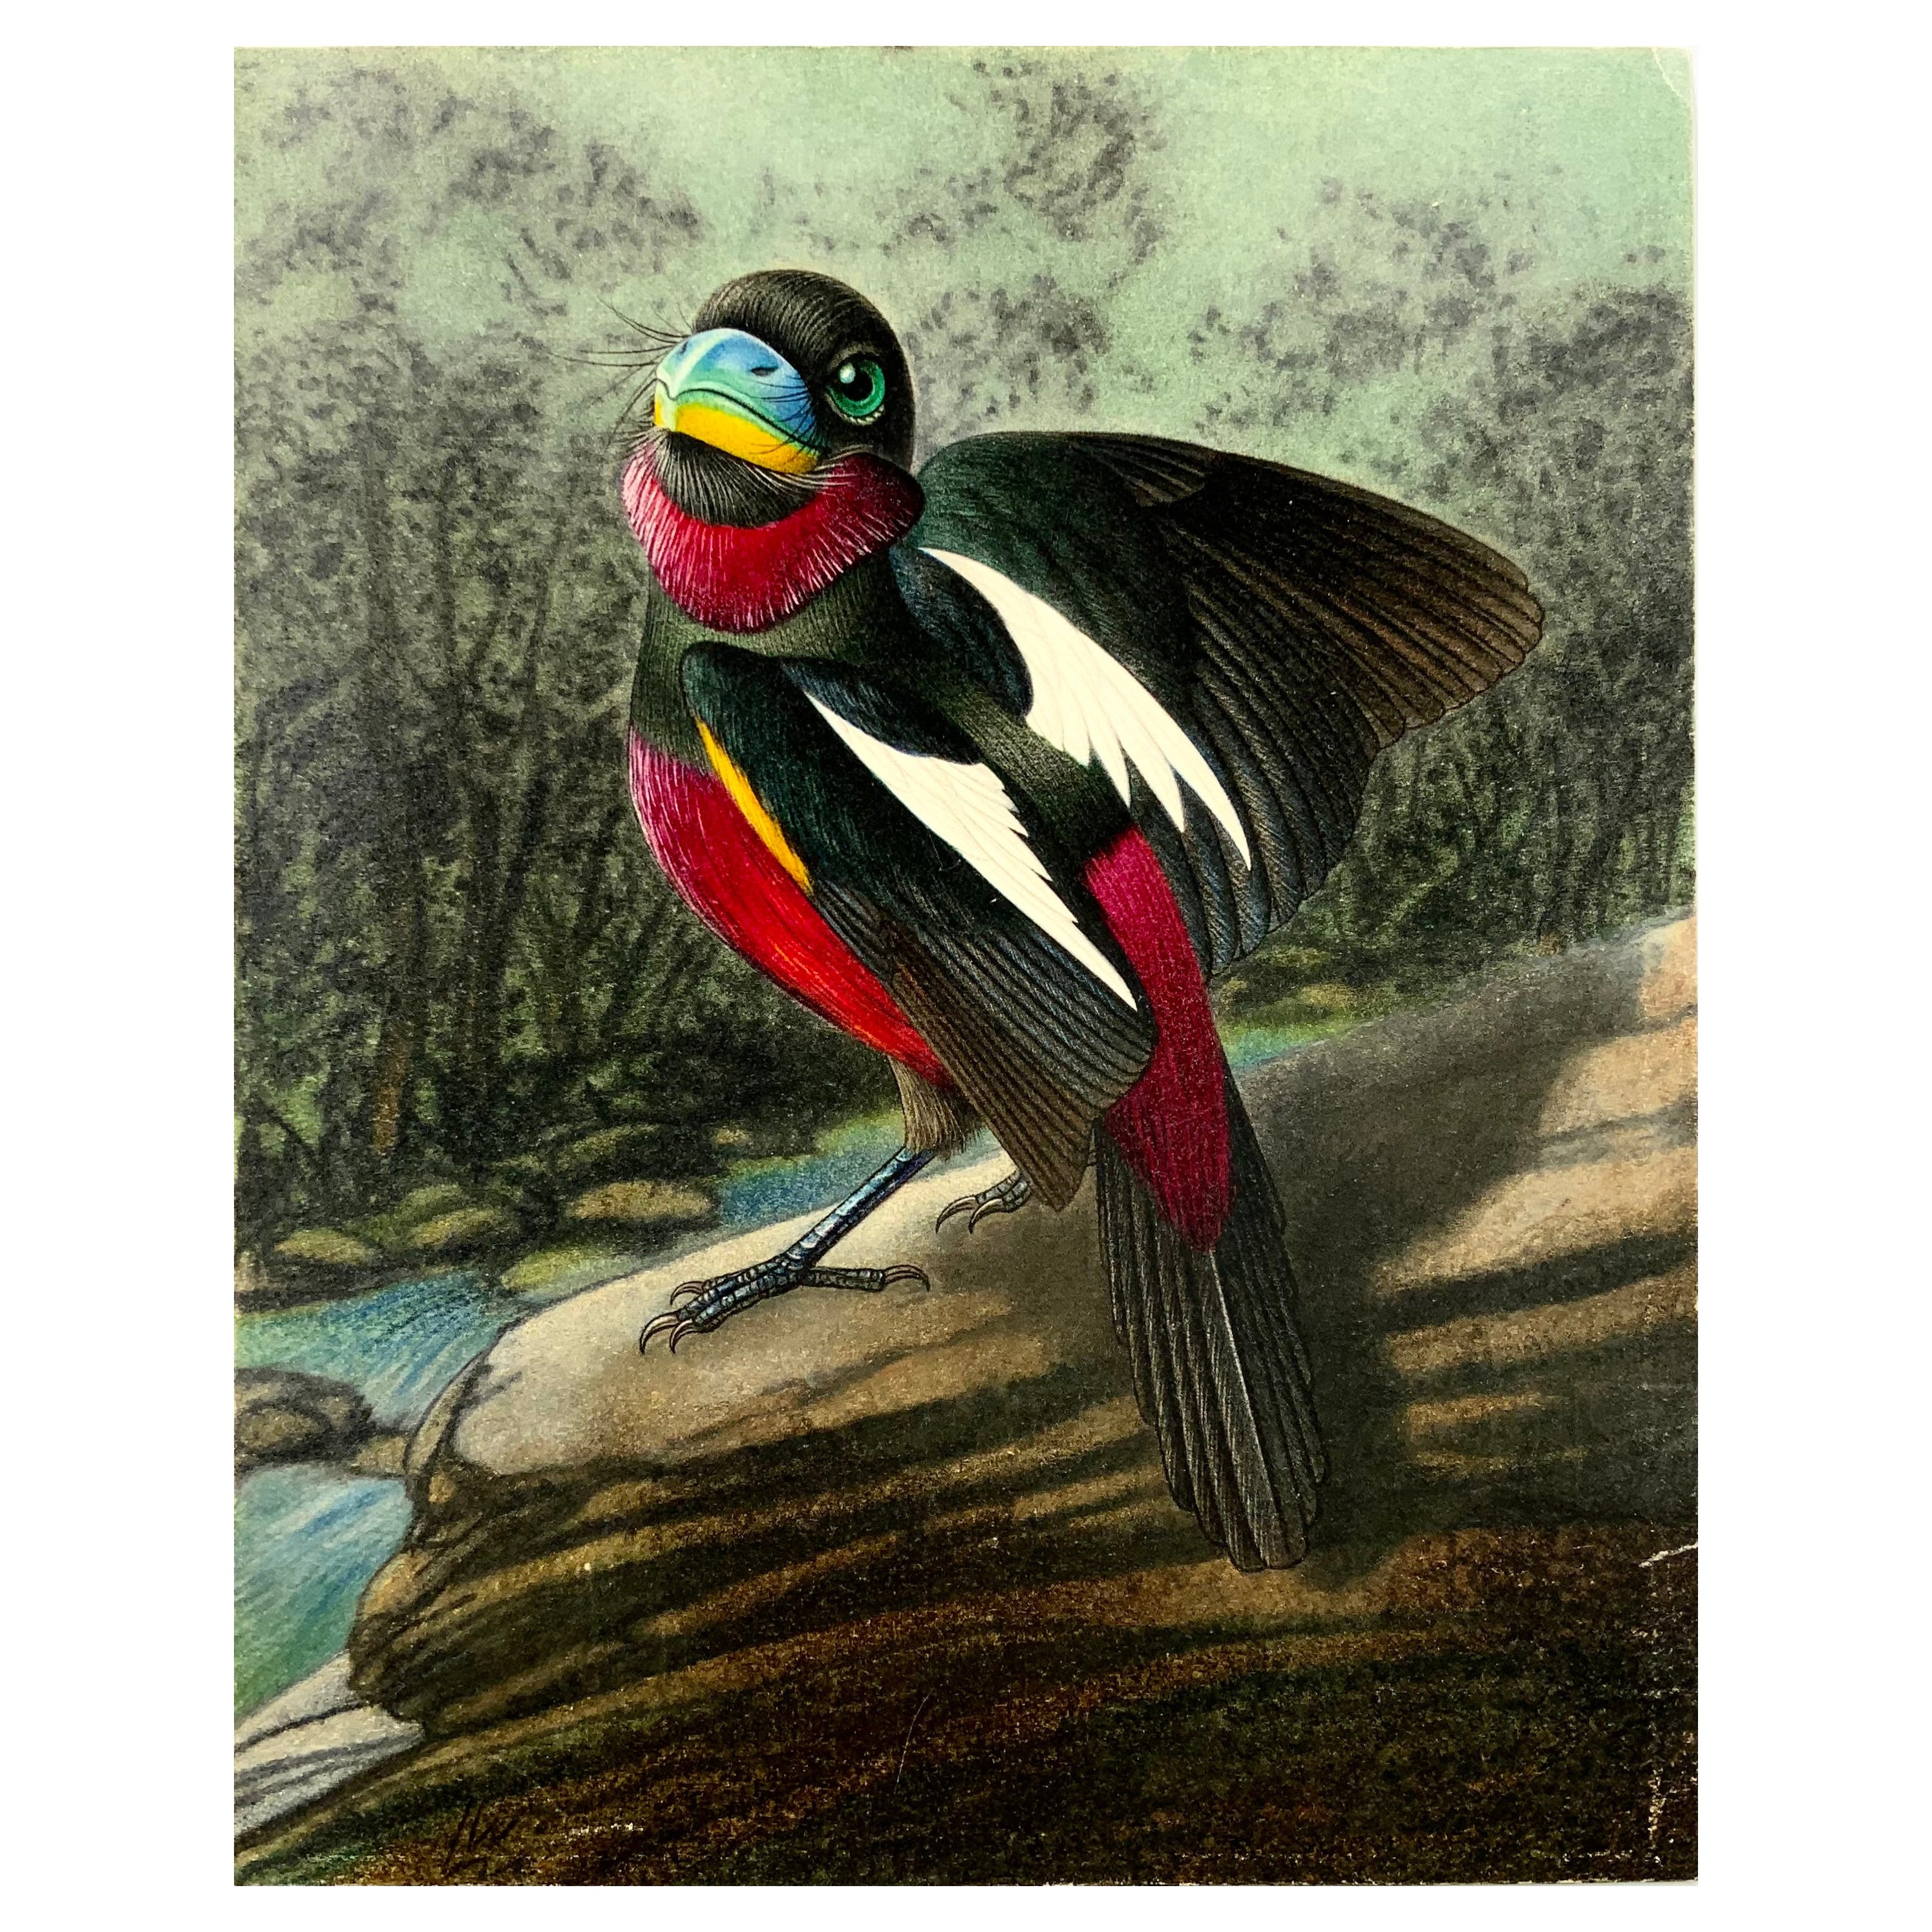 Broadbill, ornithologie, Walter Linsenmaier, dessin au crayon coloré de 1952